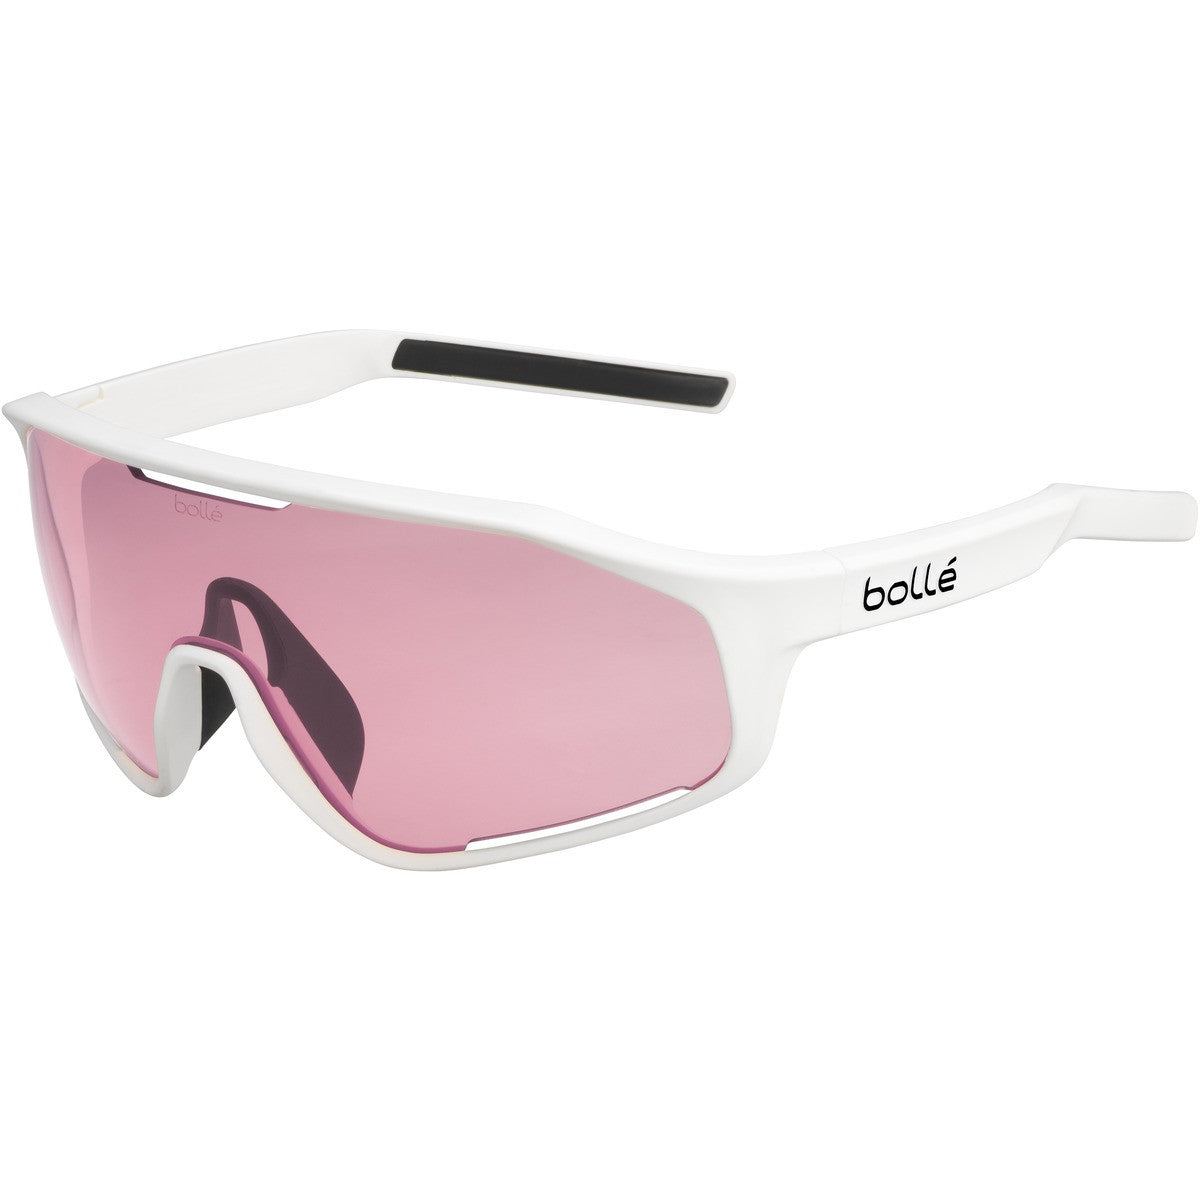 Bolle Shifter Sunglasses  White Matte Medium, Large